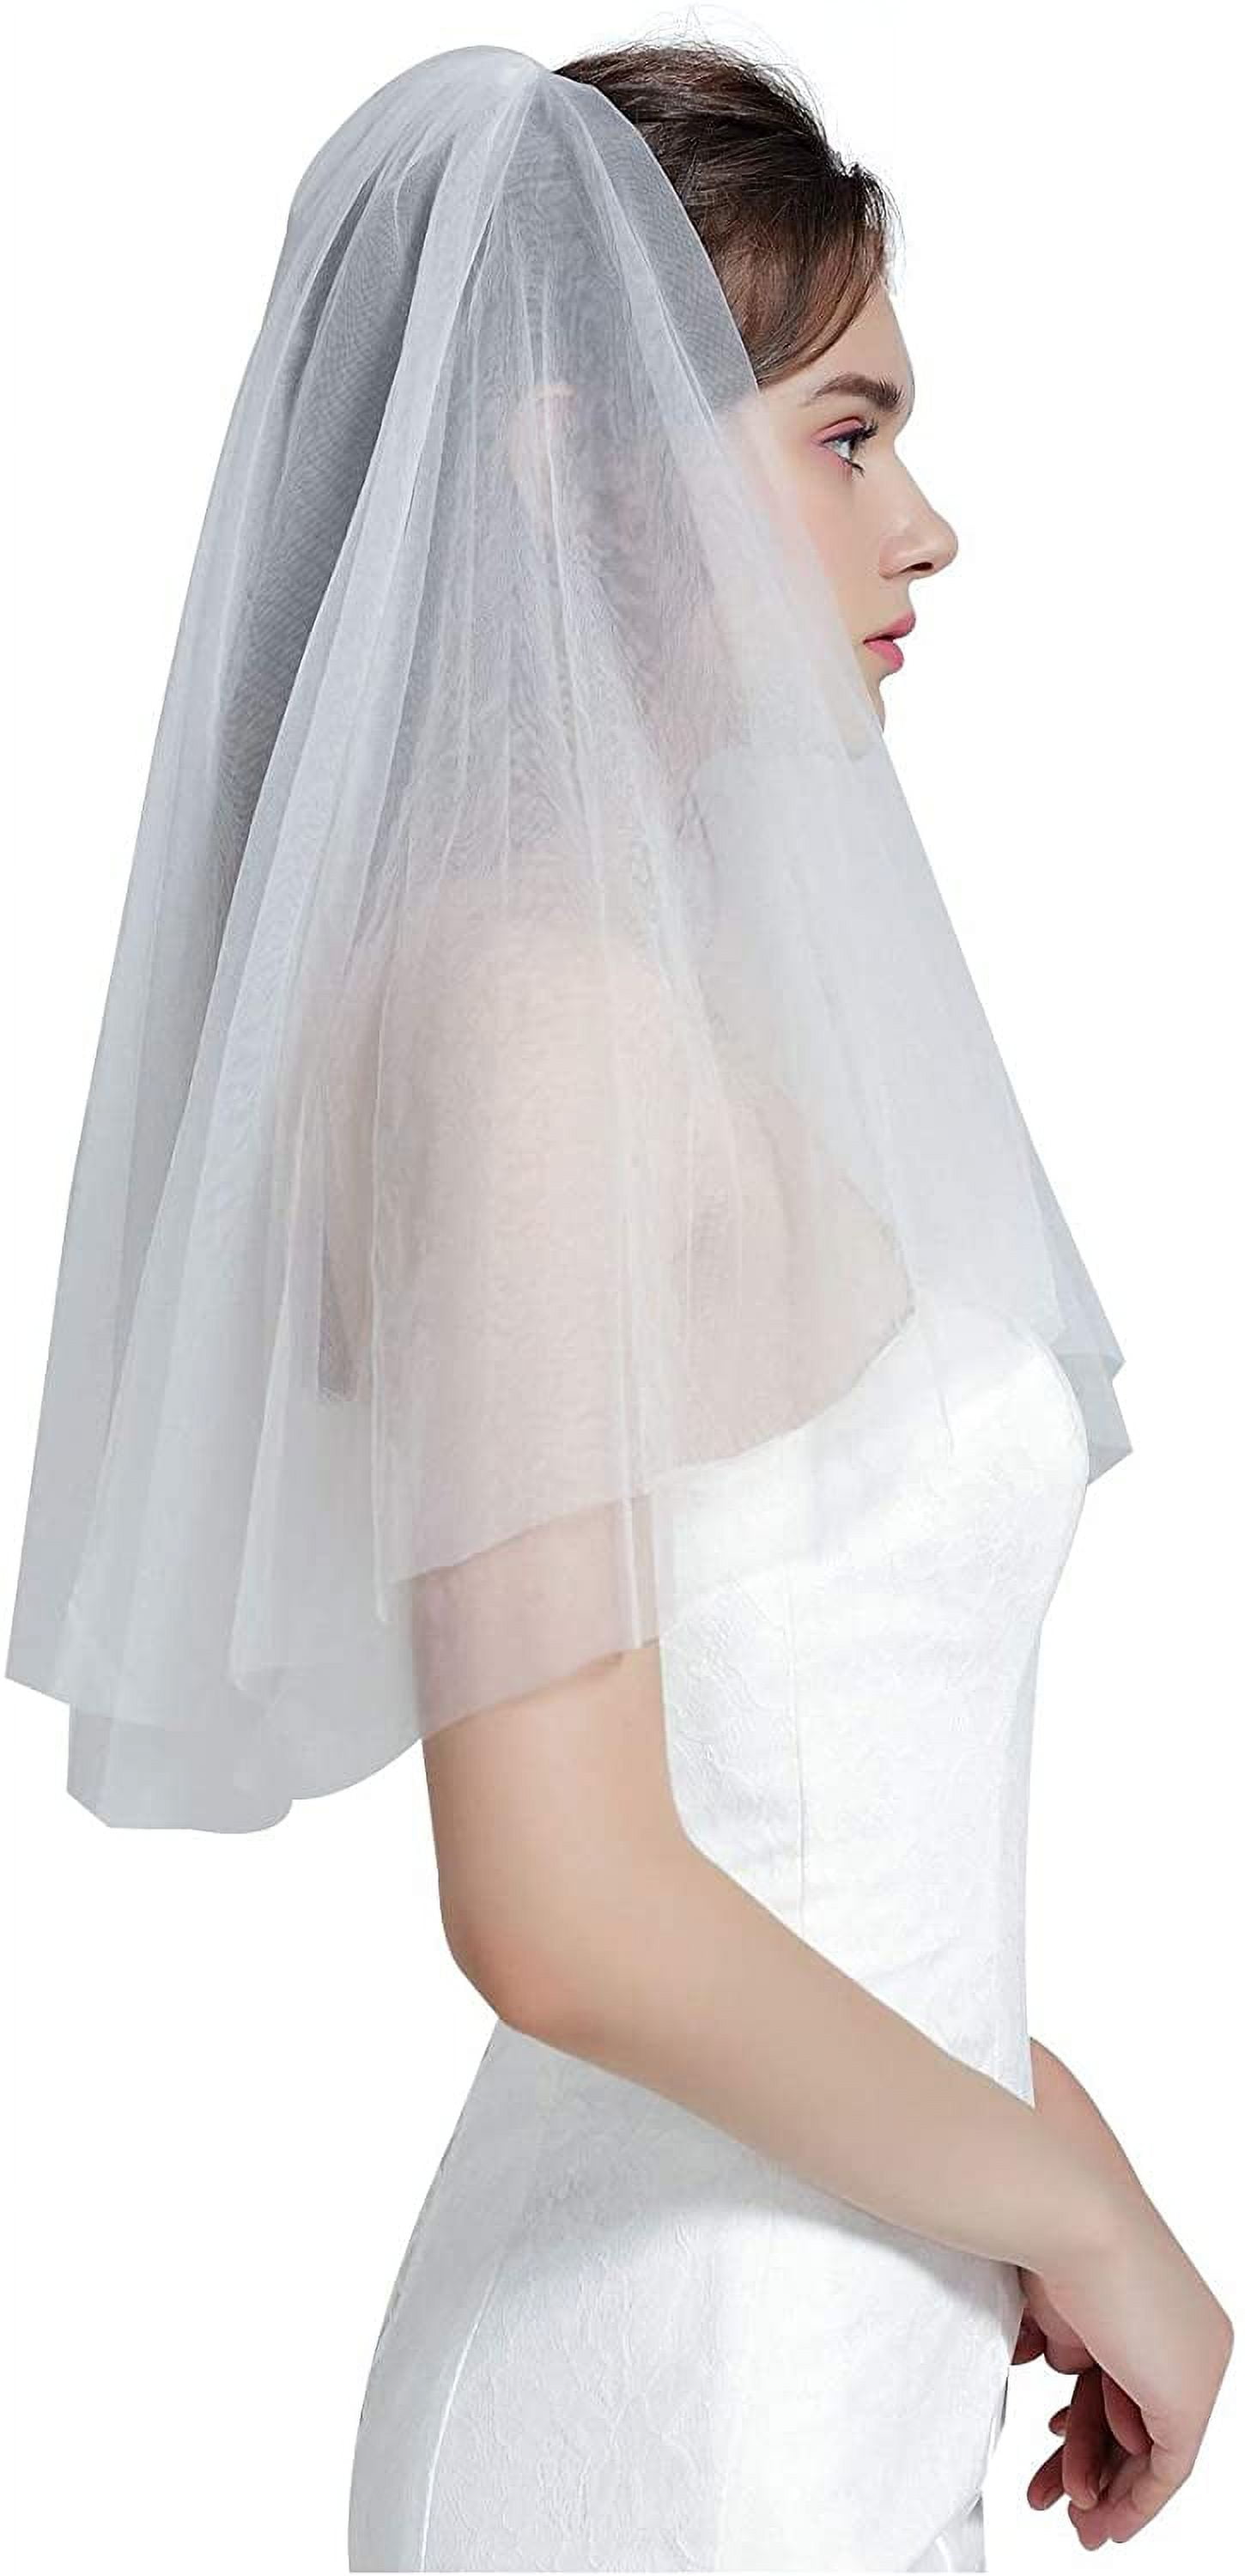 Bride Wedding Veil 2 Tier, Bridal Veil Women's Simple Tulle Short